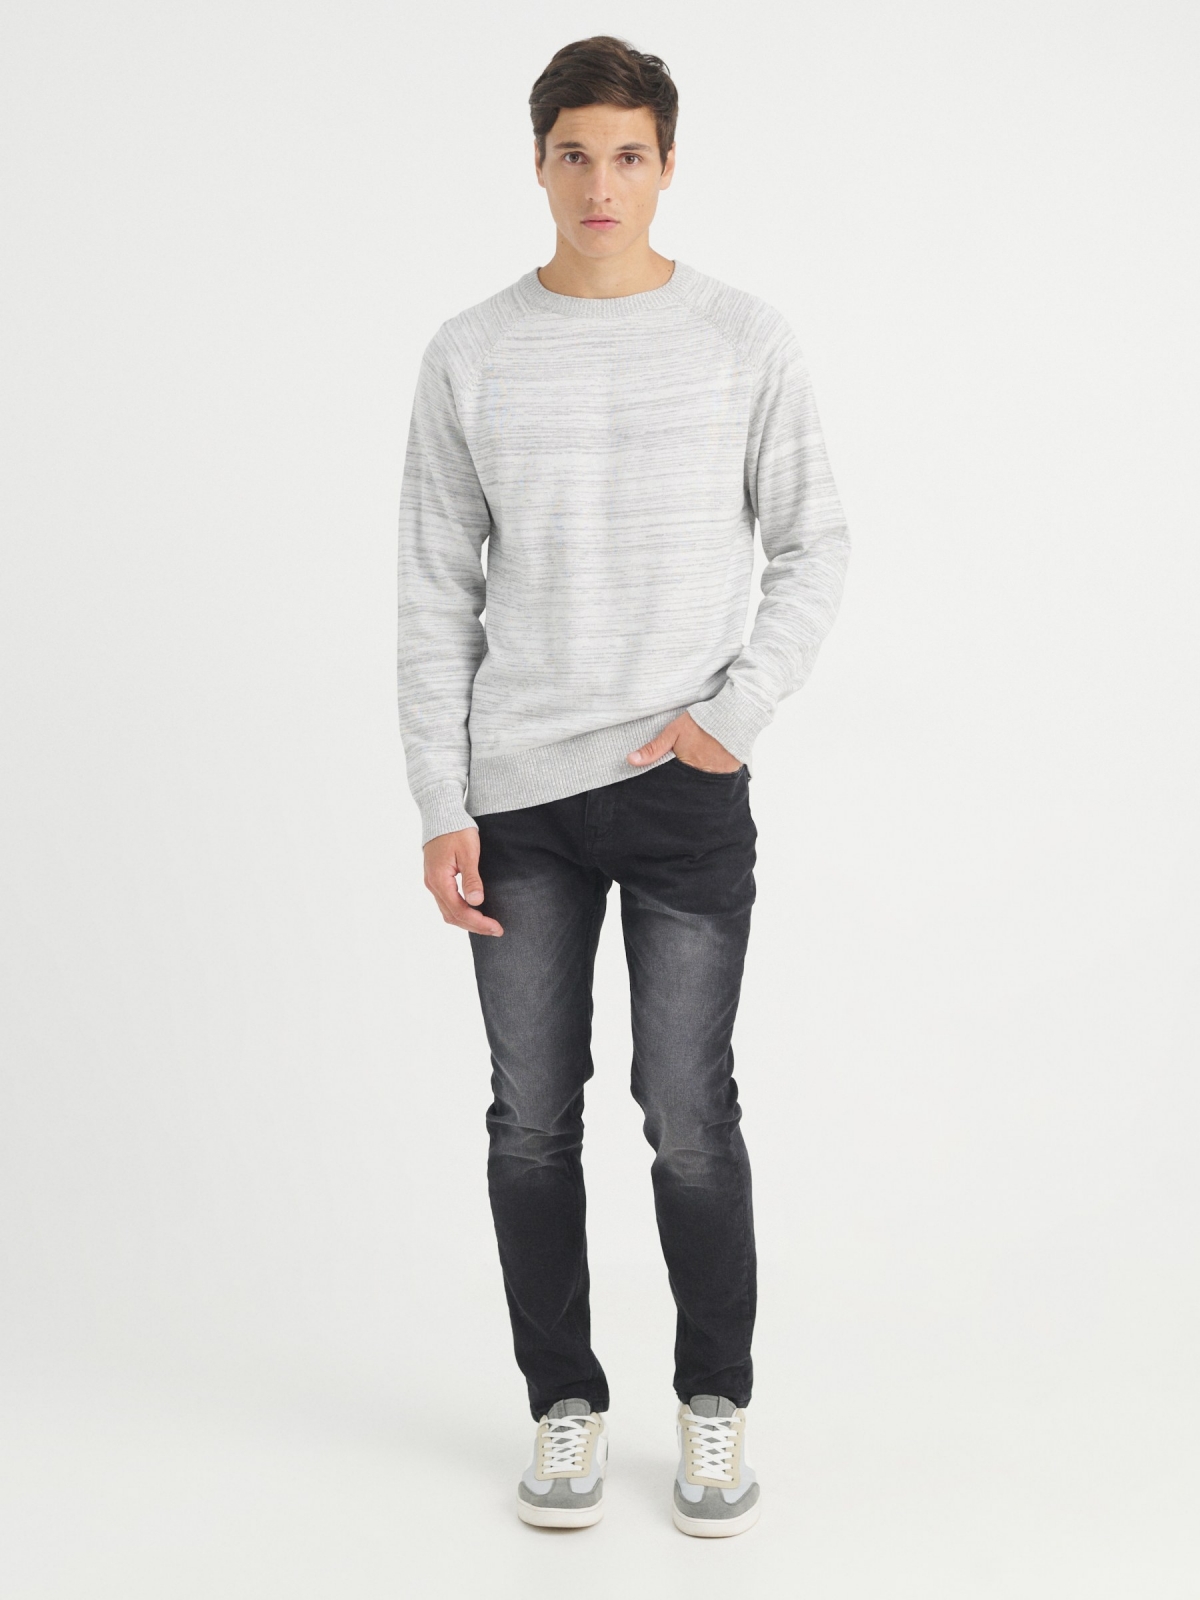 Basic mottled sweater light grey front view